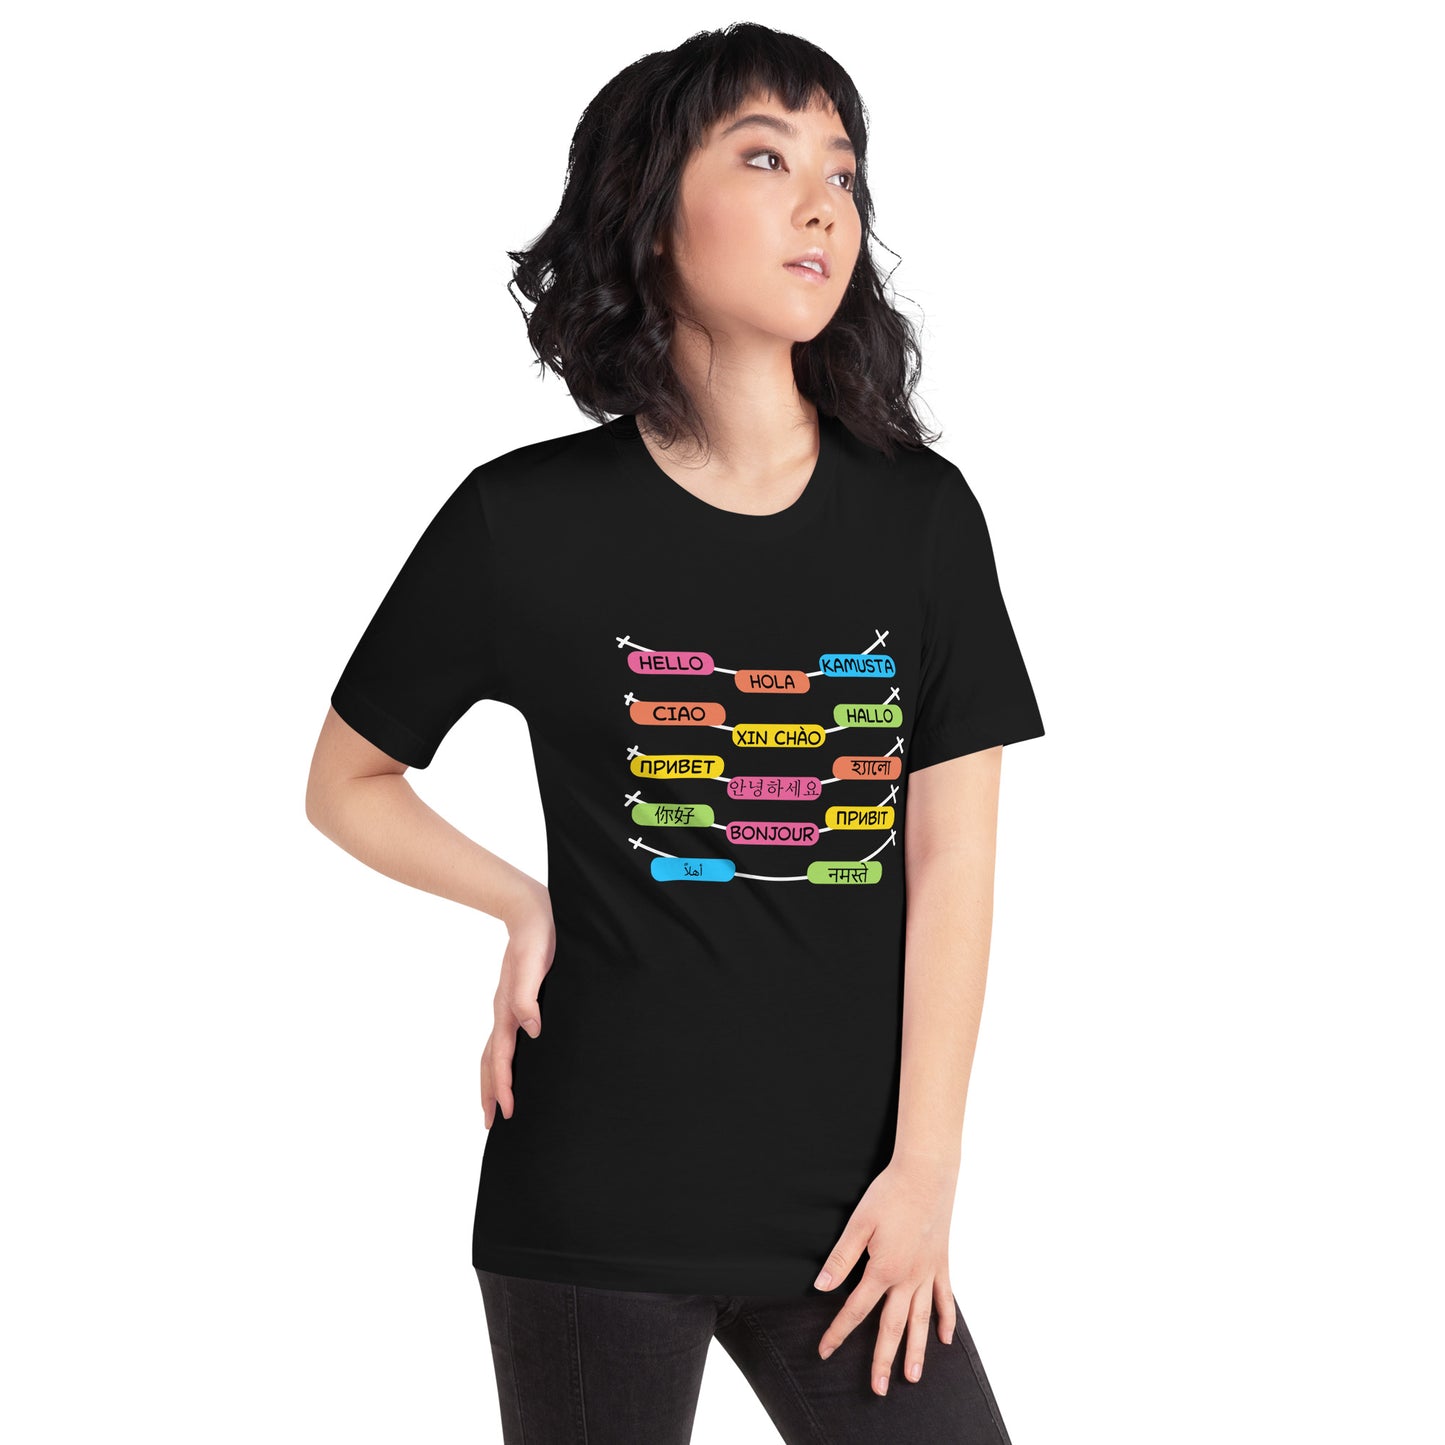 Multilingual Word Wall t-shirt.